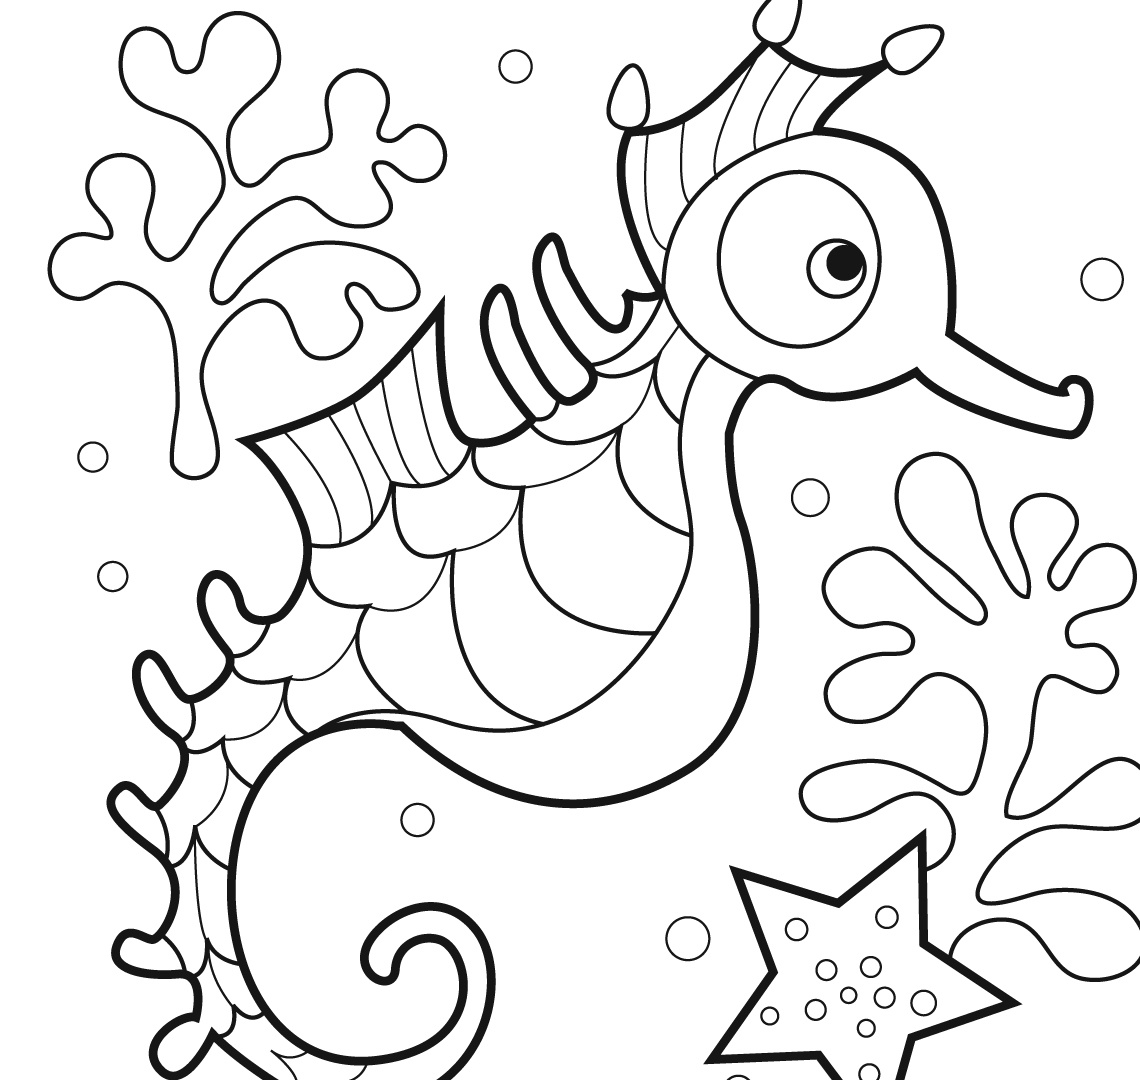 Раскраски на тему окружающий мир. Раскраски на тему морской конек. Раскраски на морскую тематику. Раскраски на тему окружающий мир. Раскраски на тему морской конек. Раскраски для детей с тематикой подводного мира. Раскраски с морским коньком. 